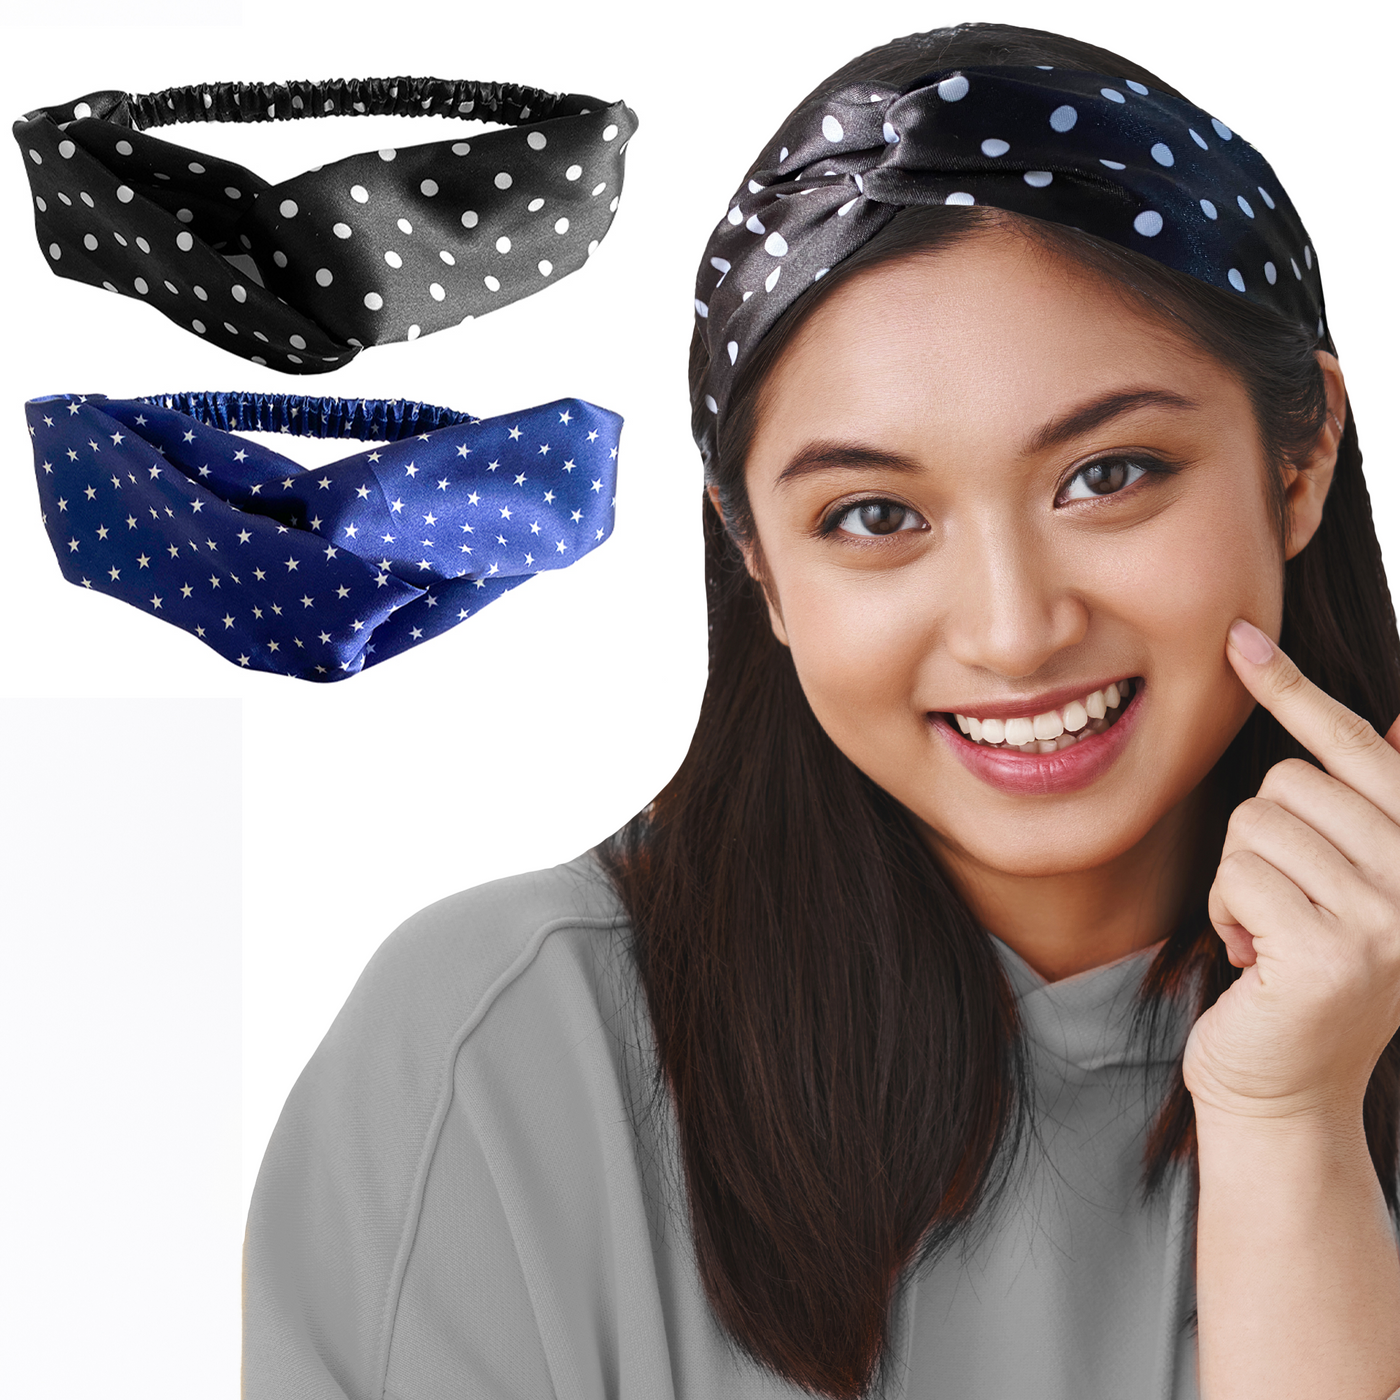 2 Luxury Satin Hairbands For Women - Polka Dots Dark